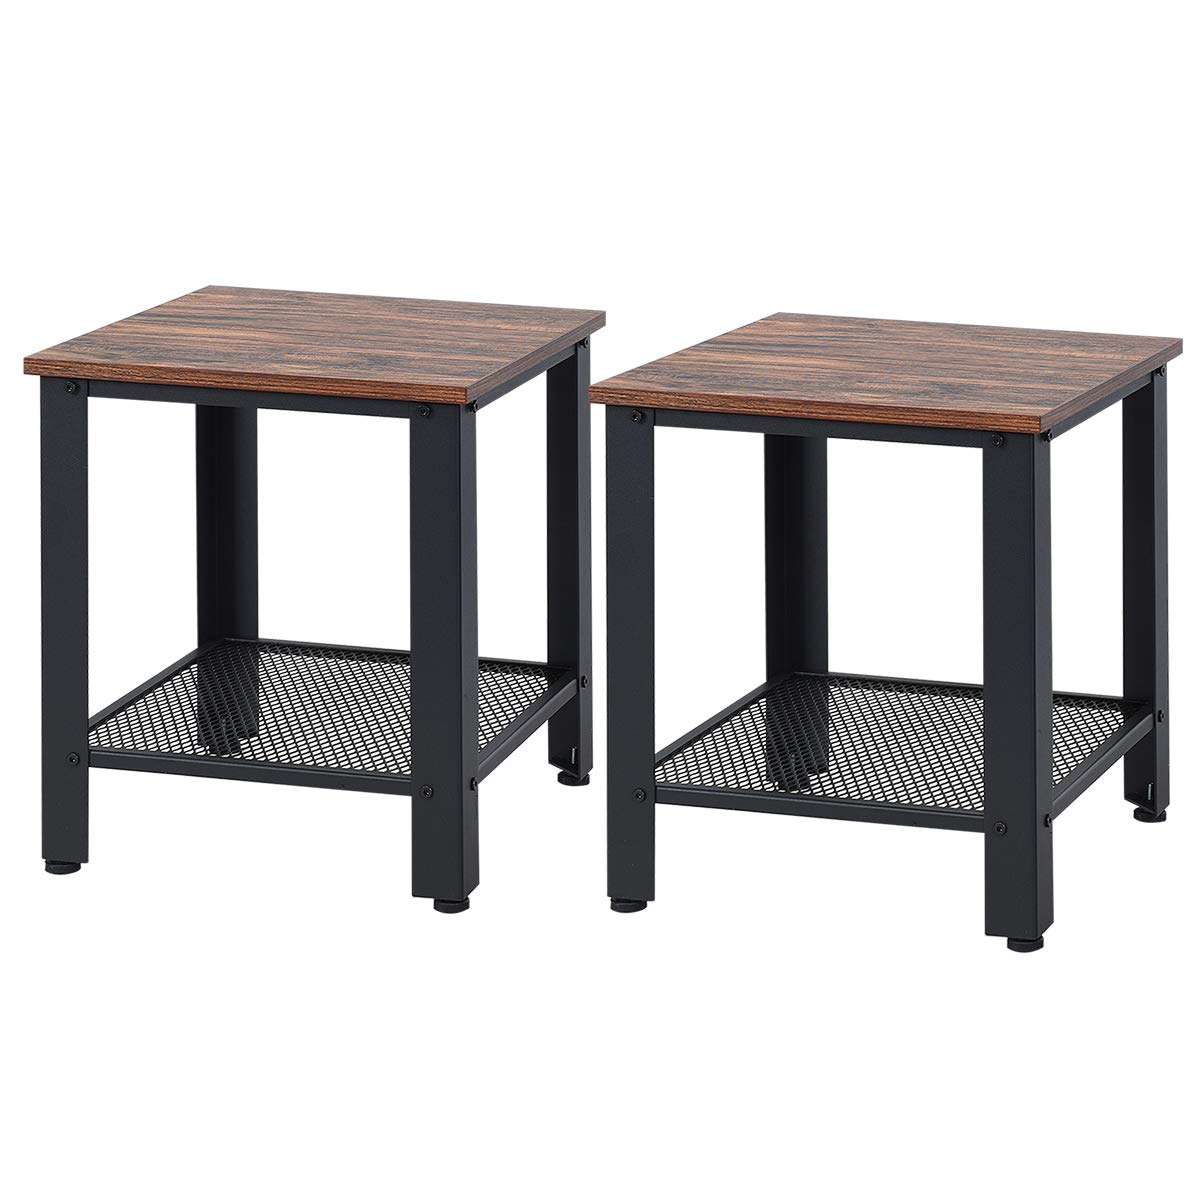 Giantex Nightstand Side Table 2-Tier W/Adjustable Feet, Storage Shelf and Metal Frame